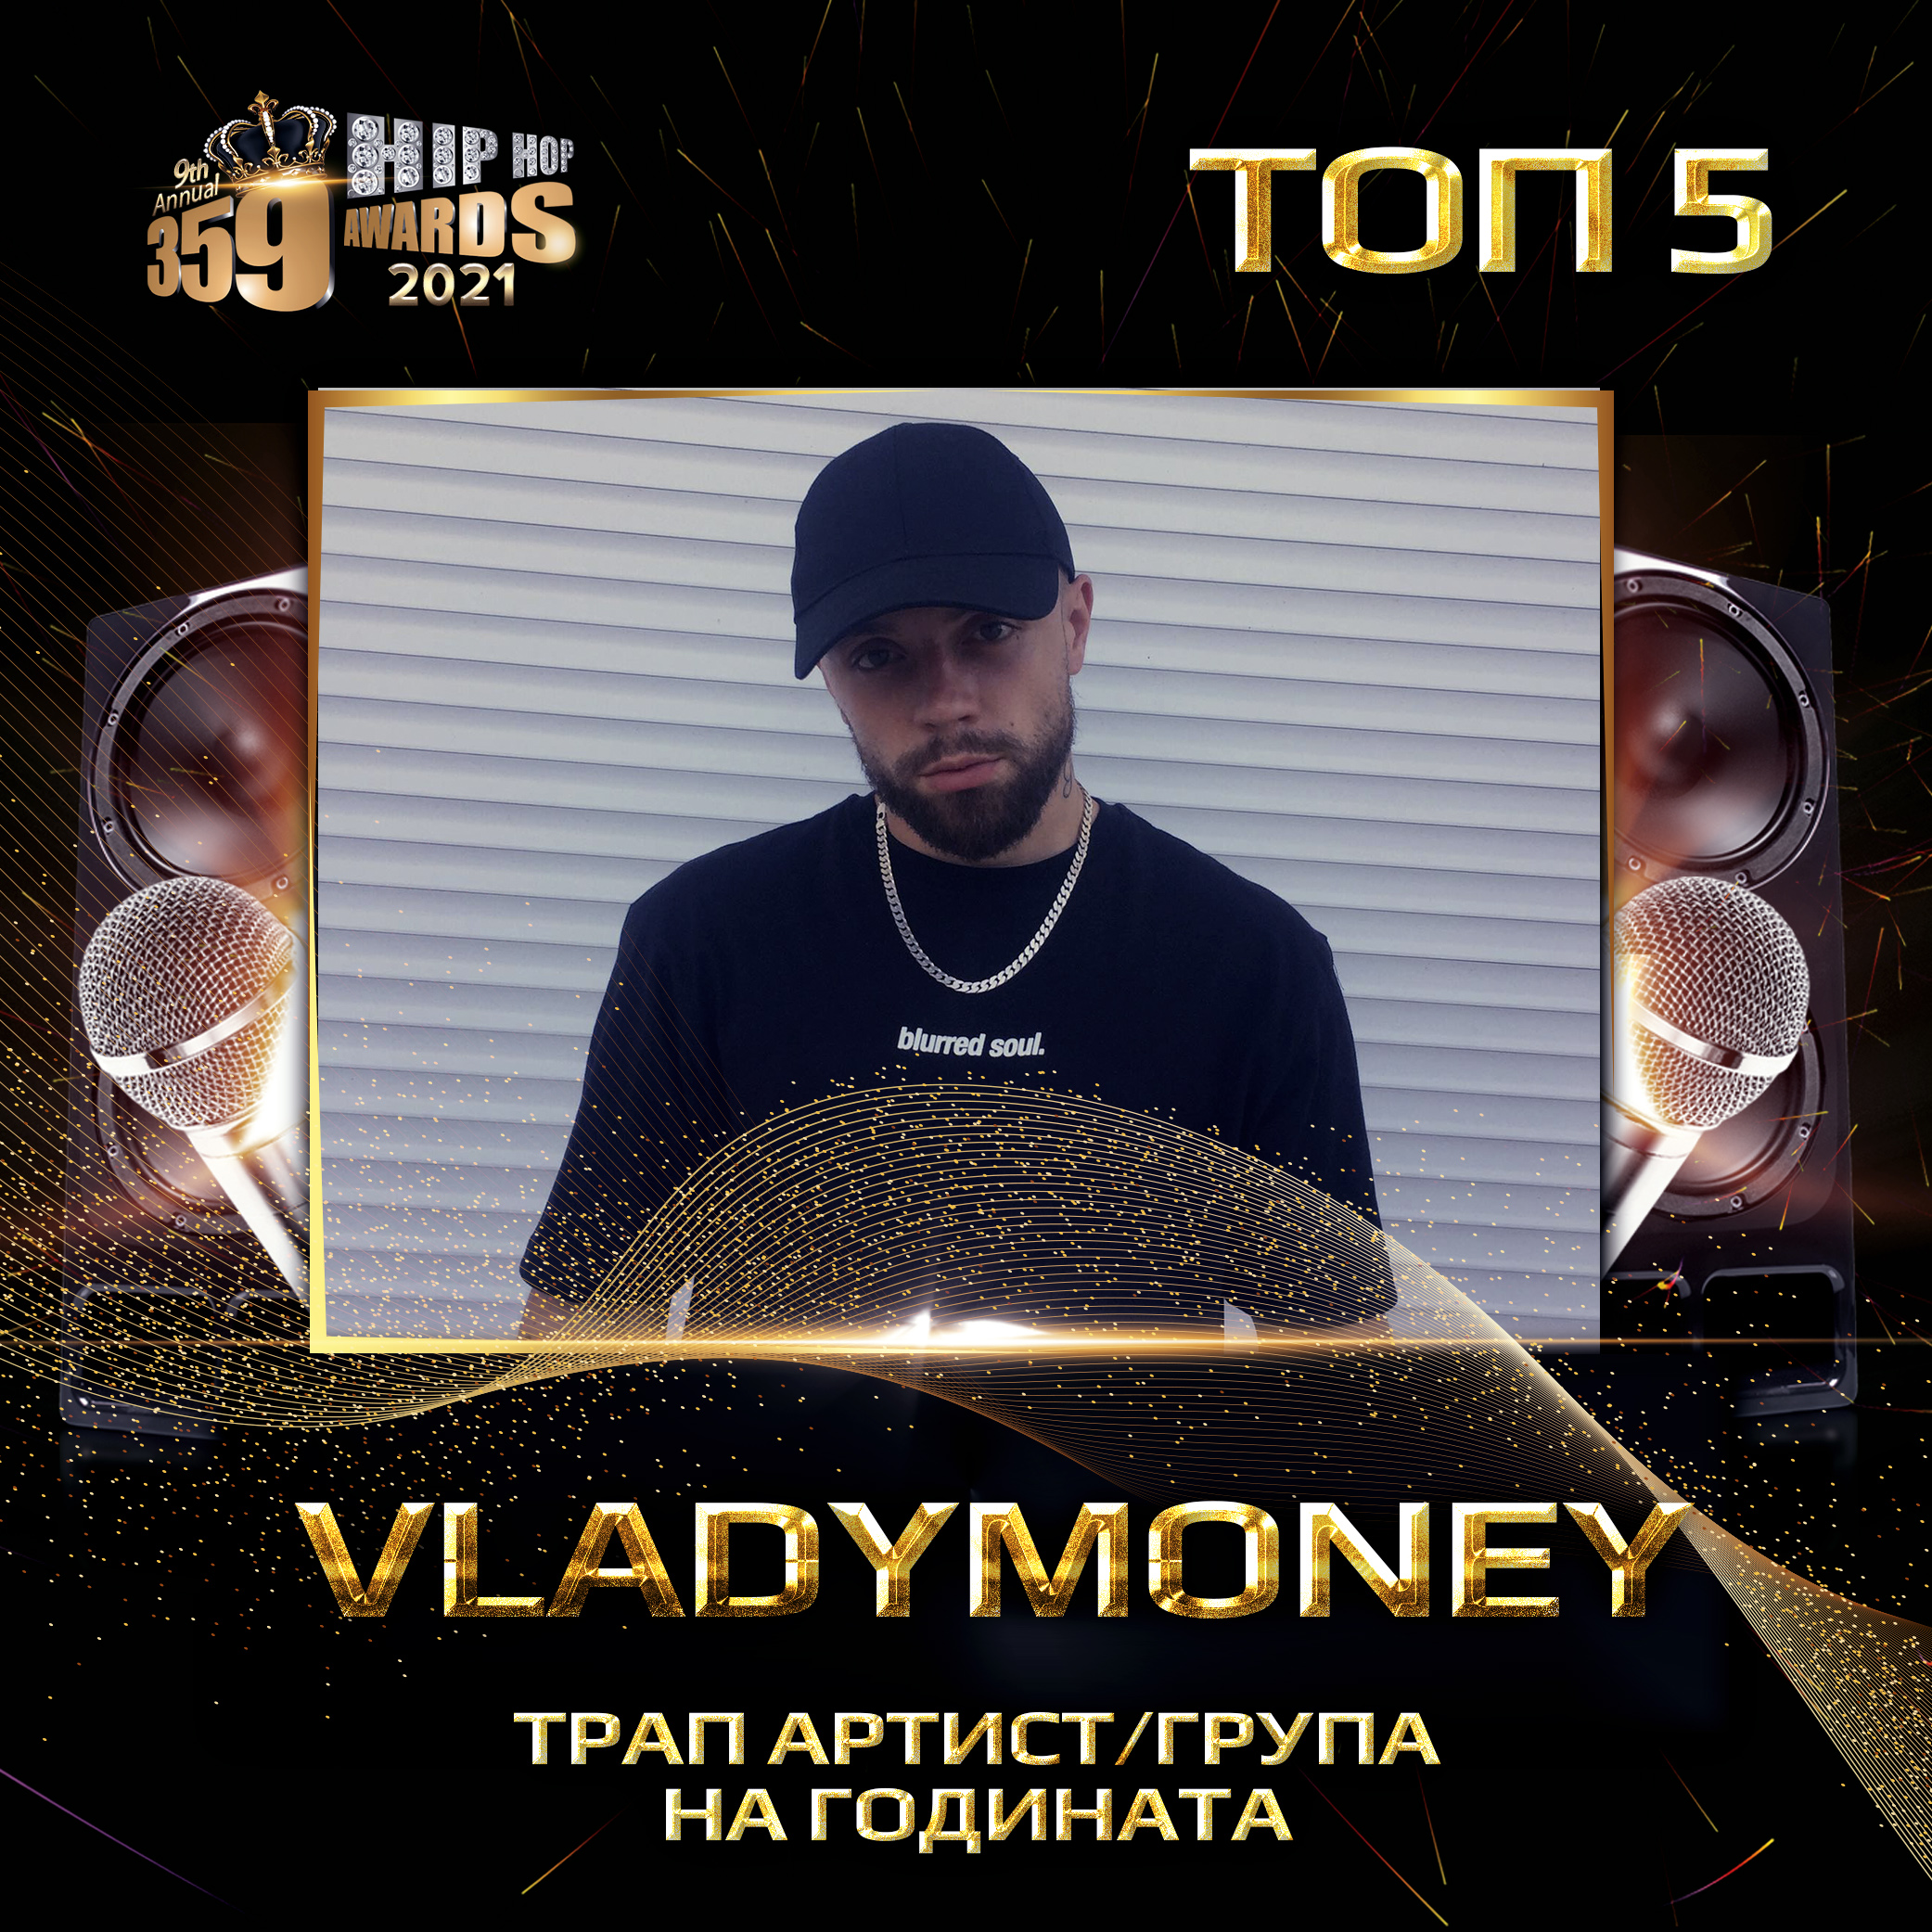 top 5  359 awards 2021 trap artist grupa vladymoney - Най-добър трап артист/група 2020